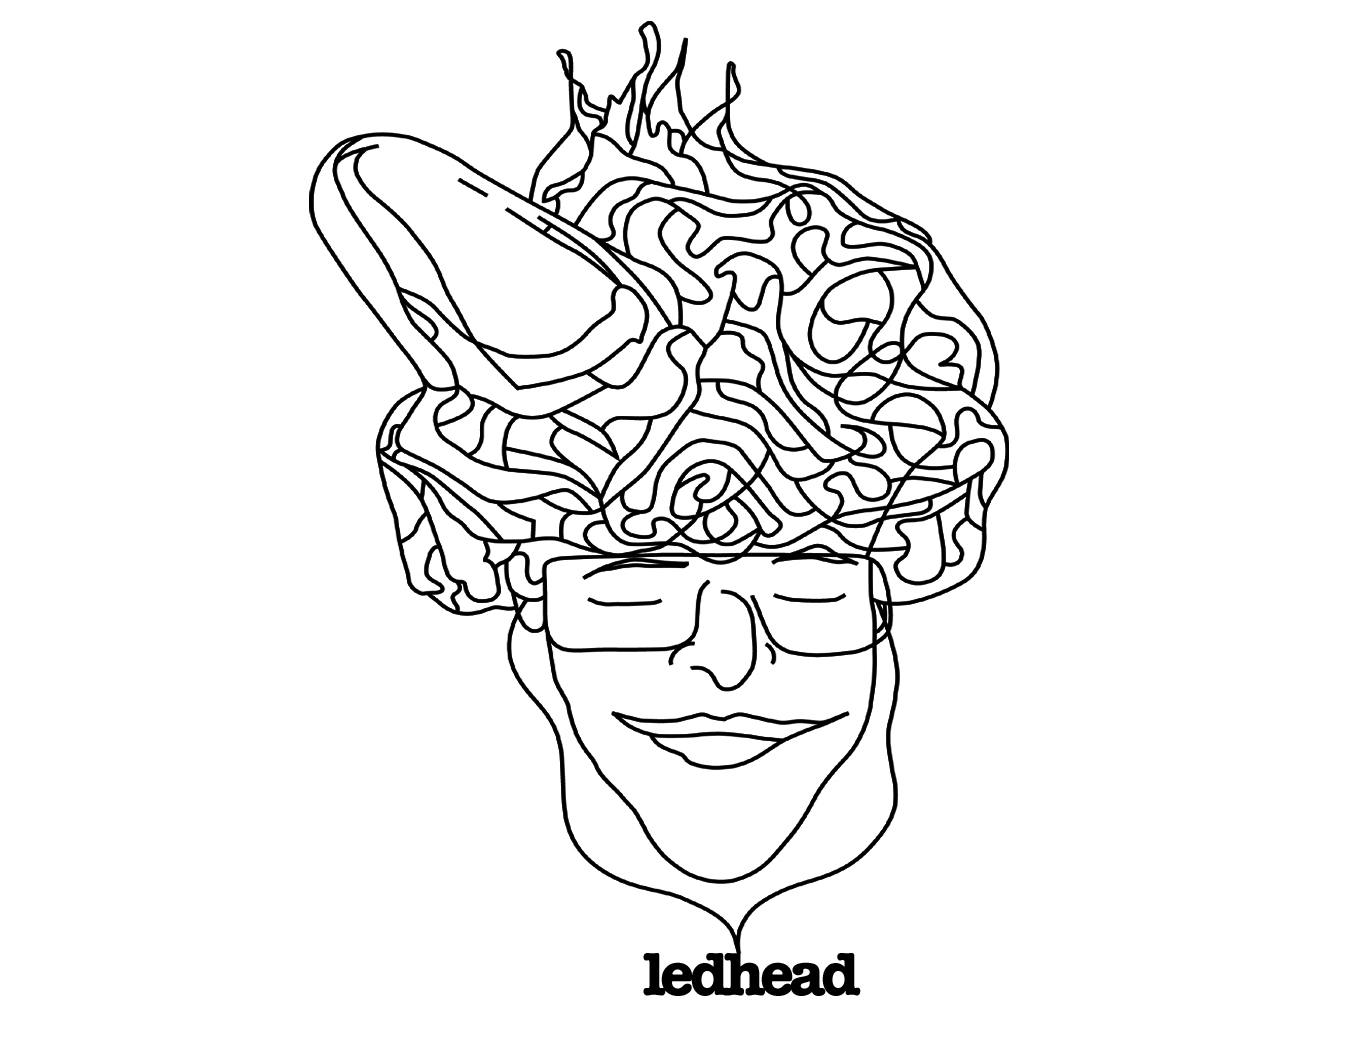 ledhead